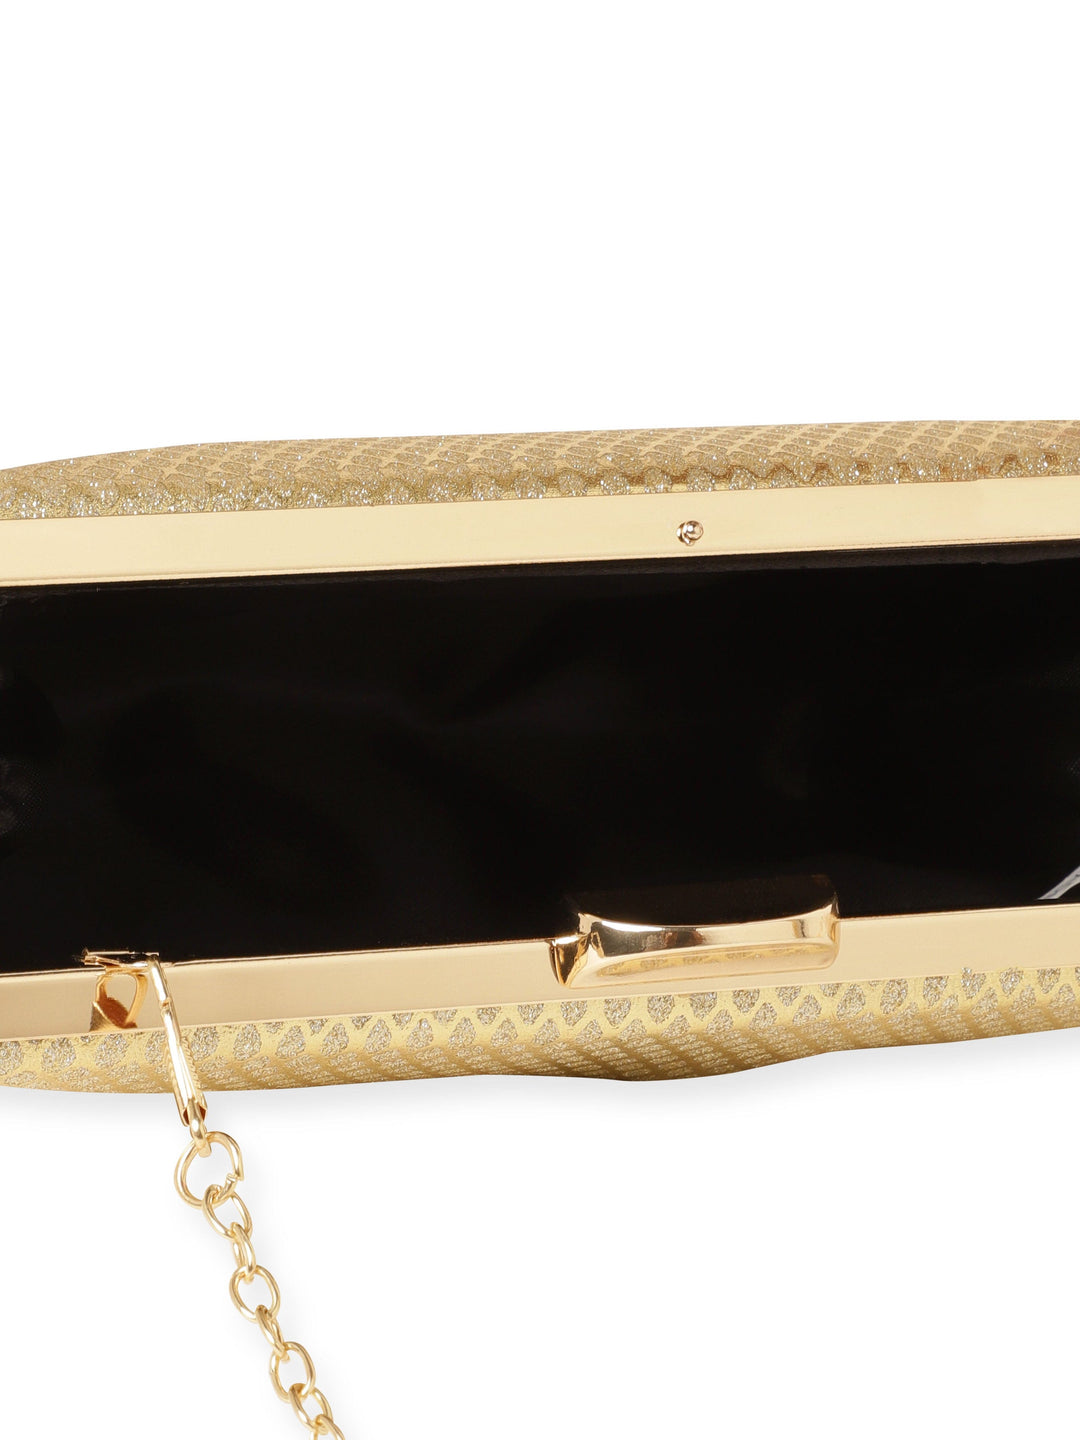 Rubans Artisan Elegance Handcrafted Gold Shimmery Clutch Bag Handbag, Wallet Accessories & Clutches